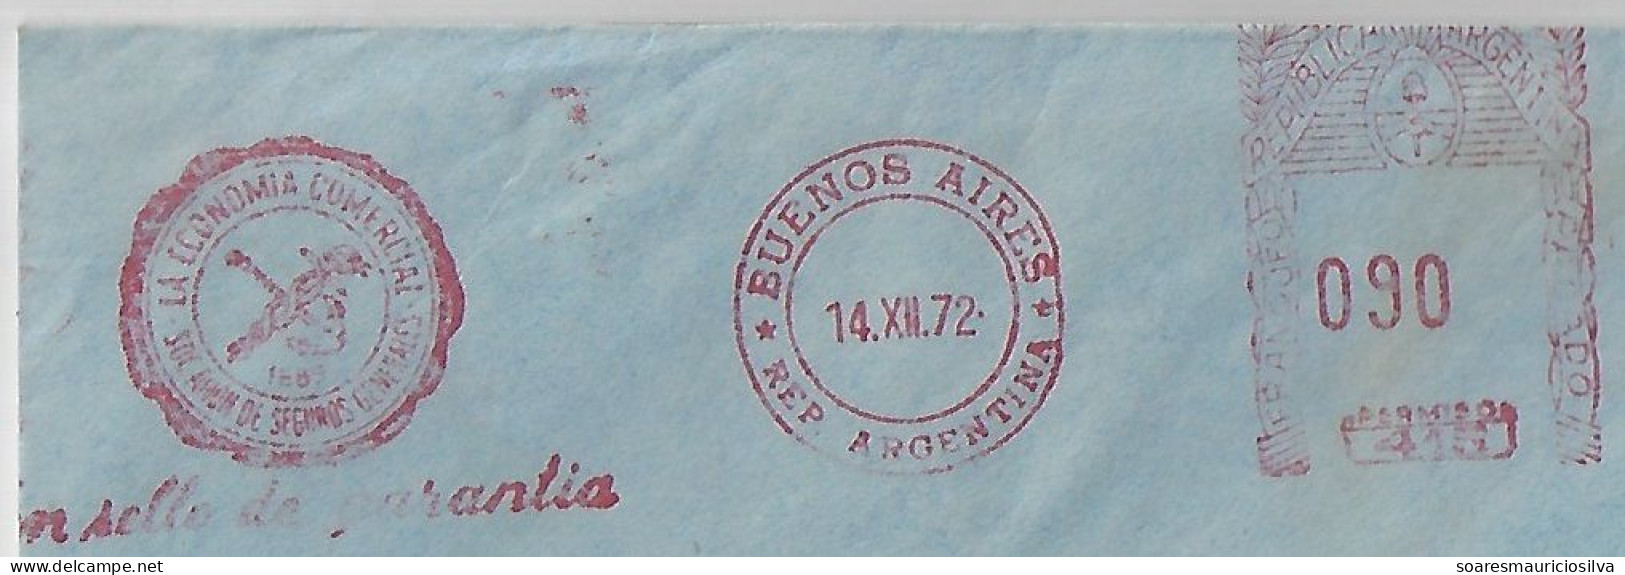 Argentina 1972 Cover Buenos Aires Obispo Trejo Meter Stamp Hasler Slogan Commercial Economy General Insurance Company - Briefe U. Dokumente